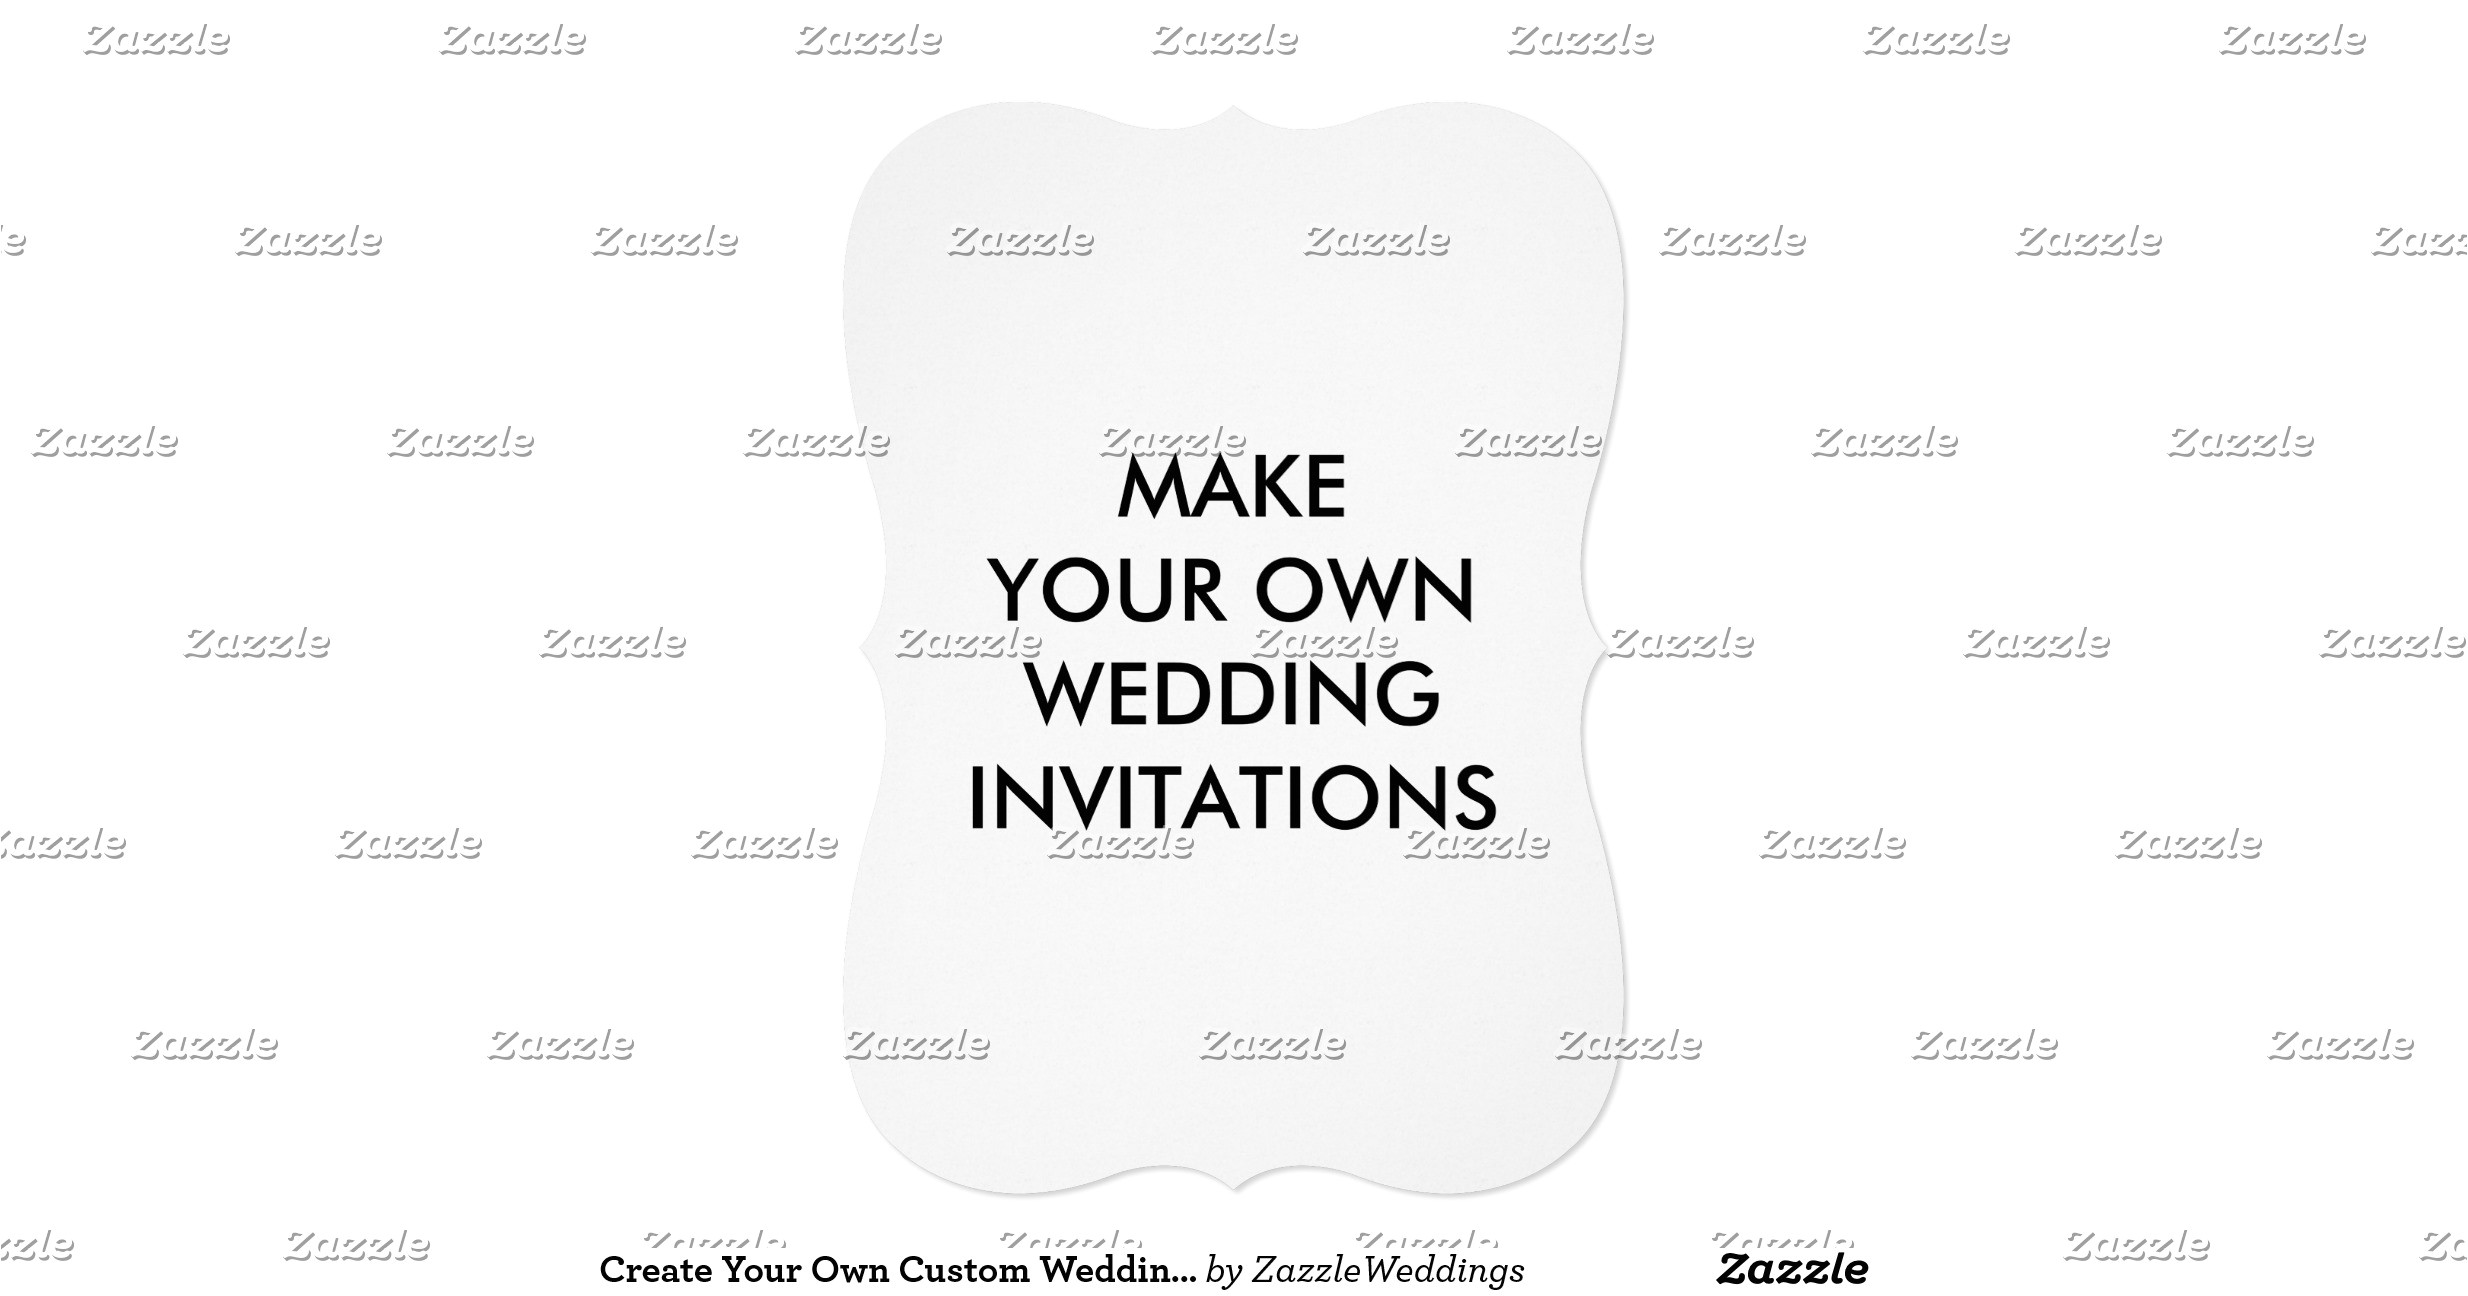 create your own custom wedding invitations 5 x 7 256206939328669080